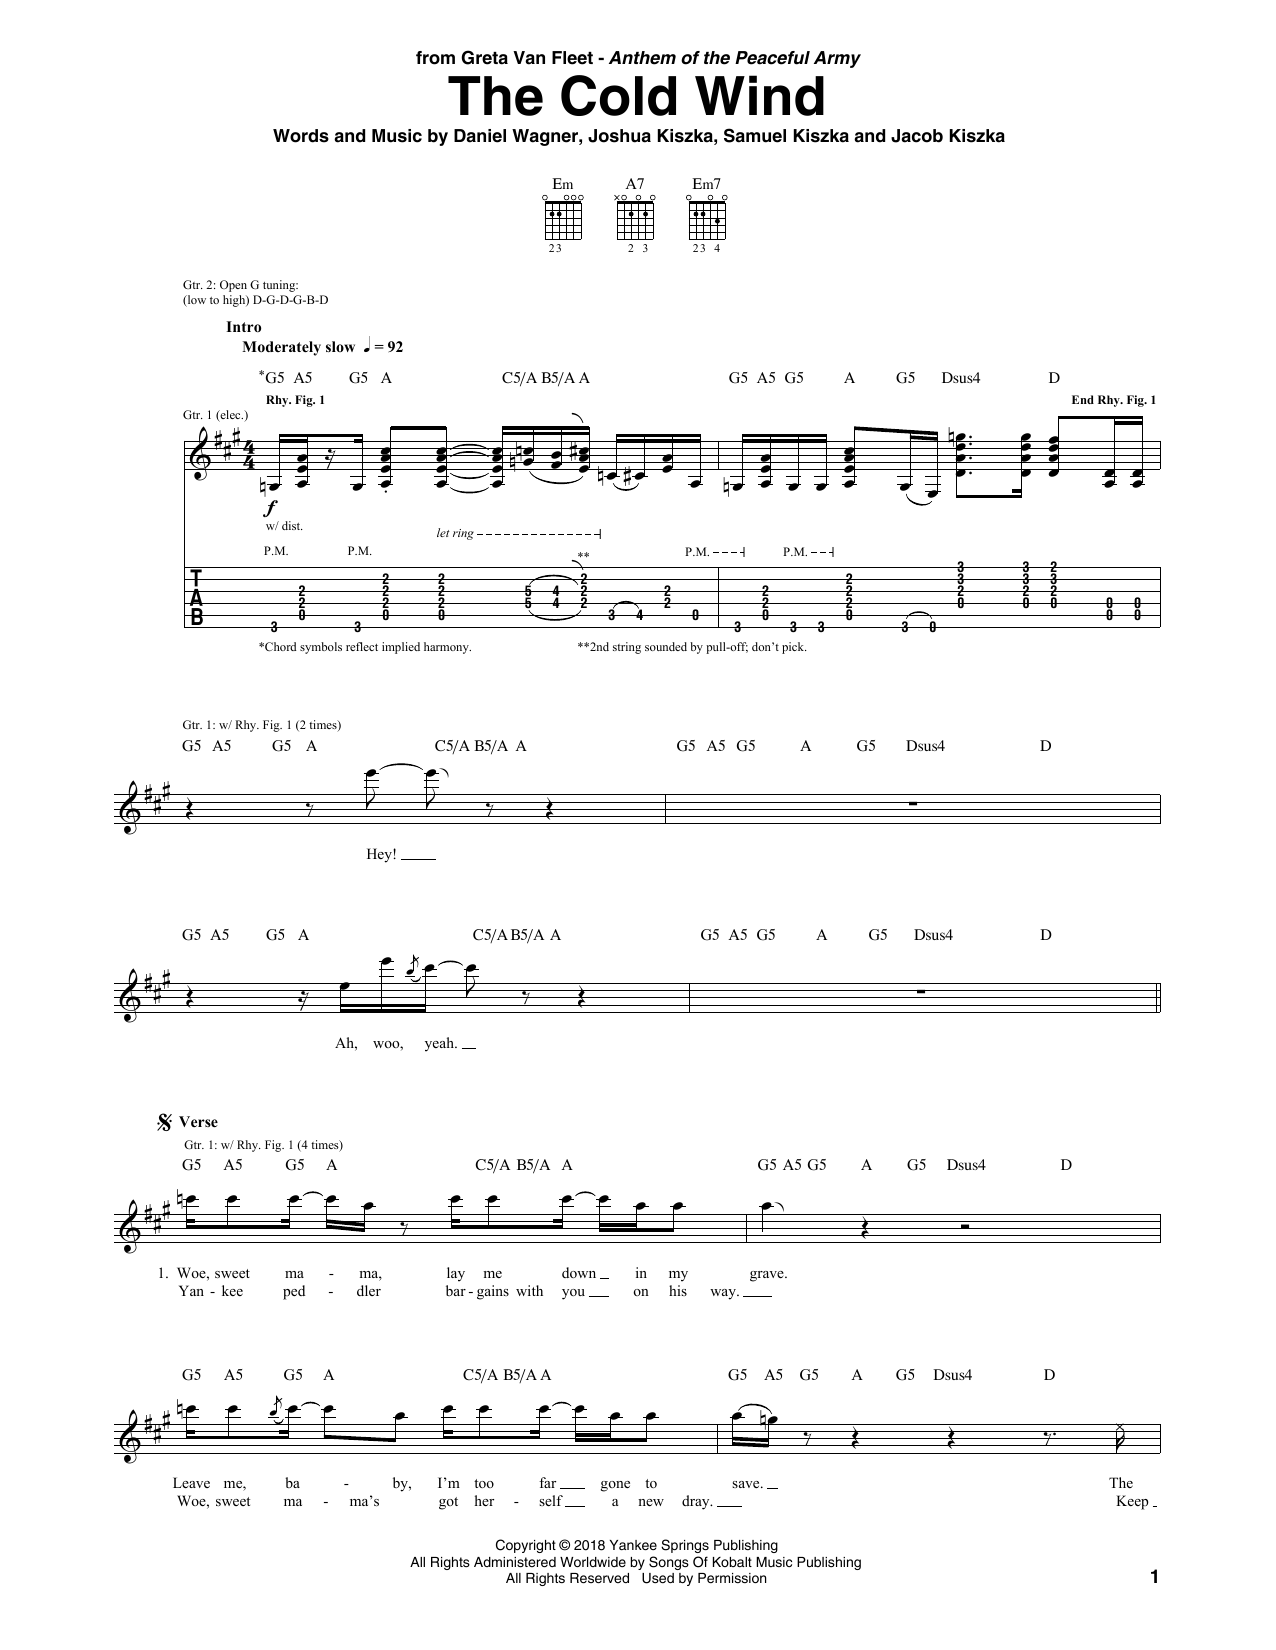 Greta Van Fleet The Cold Wind Sheet Music Notes & Chords for Guitar Tab - Download or Print PDF